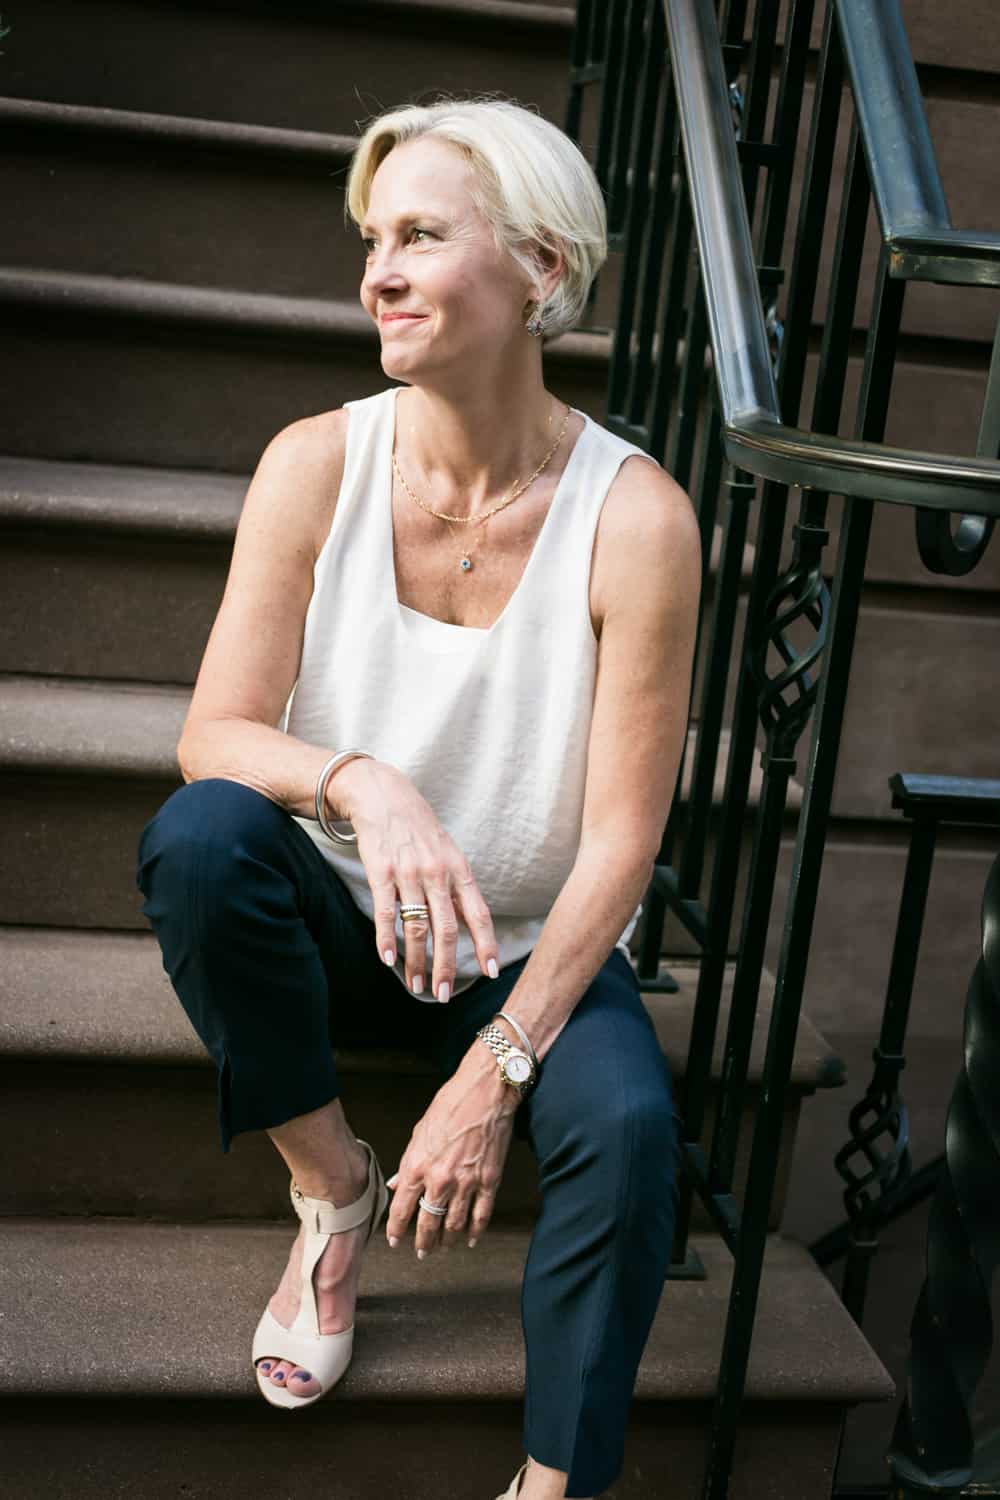 Older woman wearing white sleeveless top sitting on steps